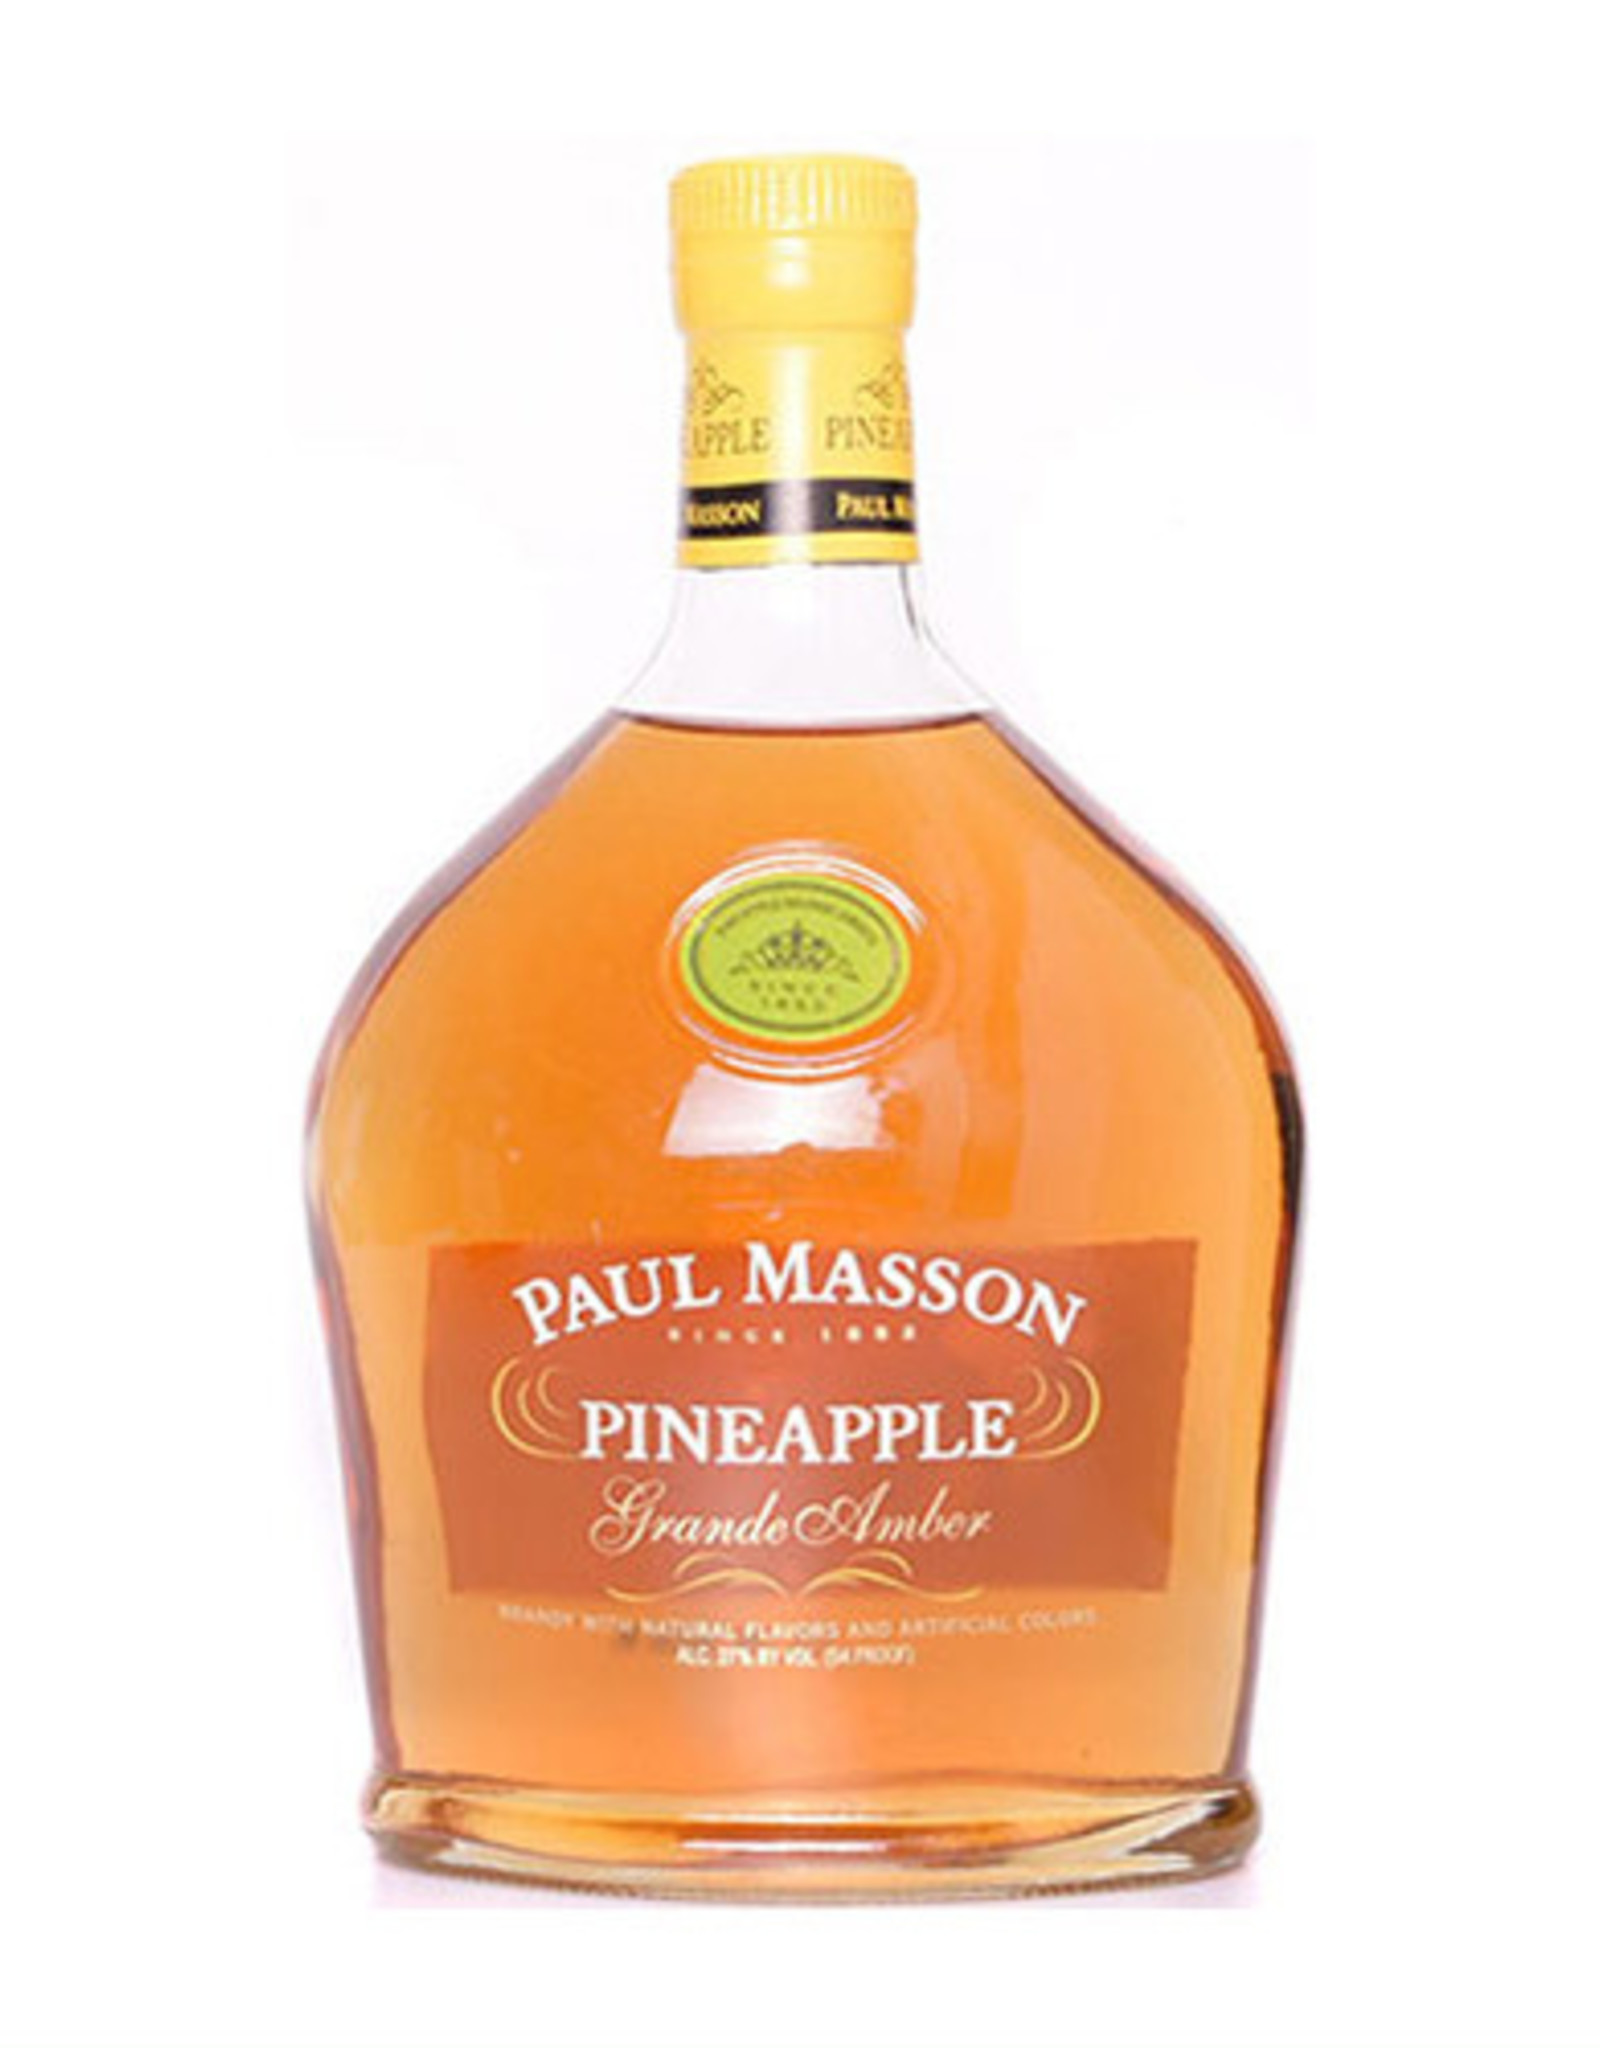 Paul Masson Paul Masson Pineapple